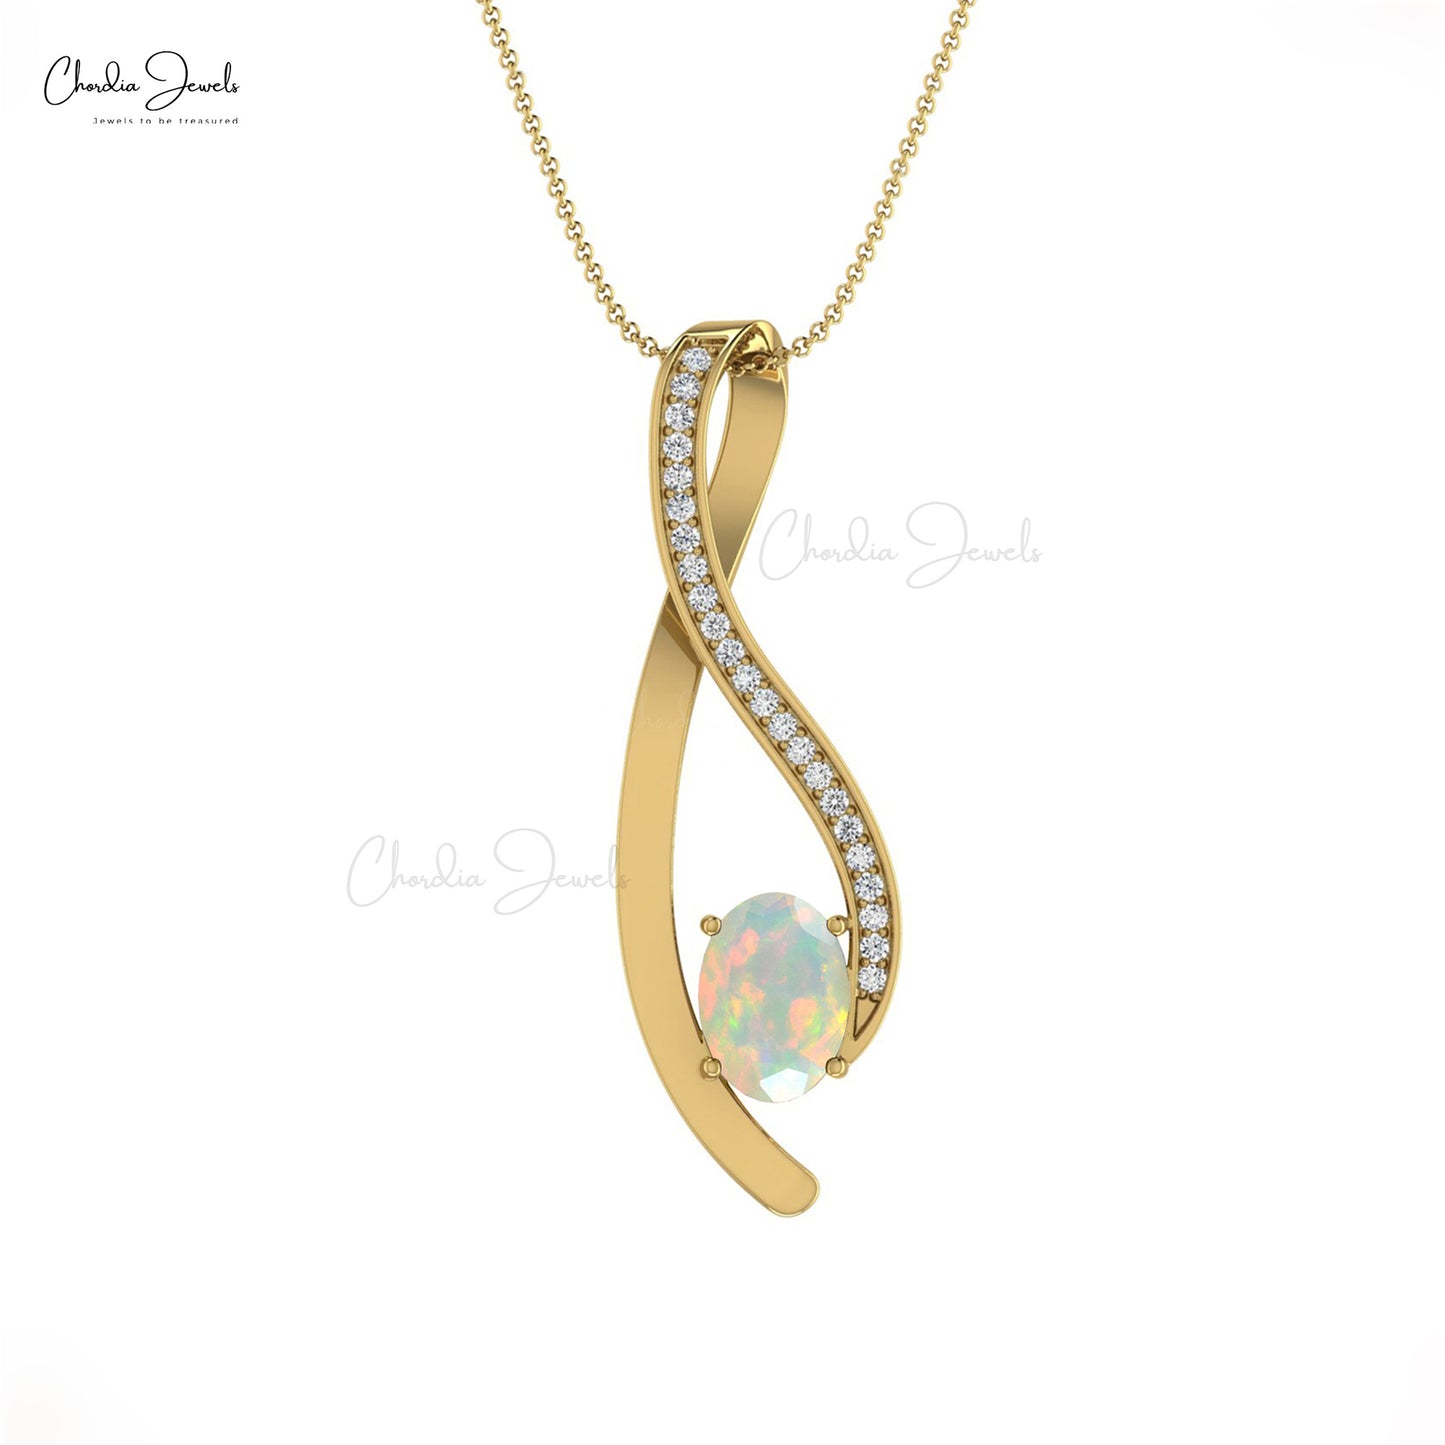 White Diamond and Euthopian Opal Pendant